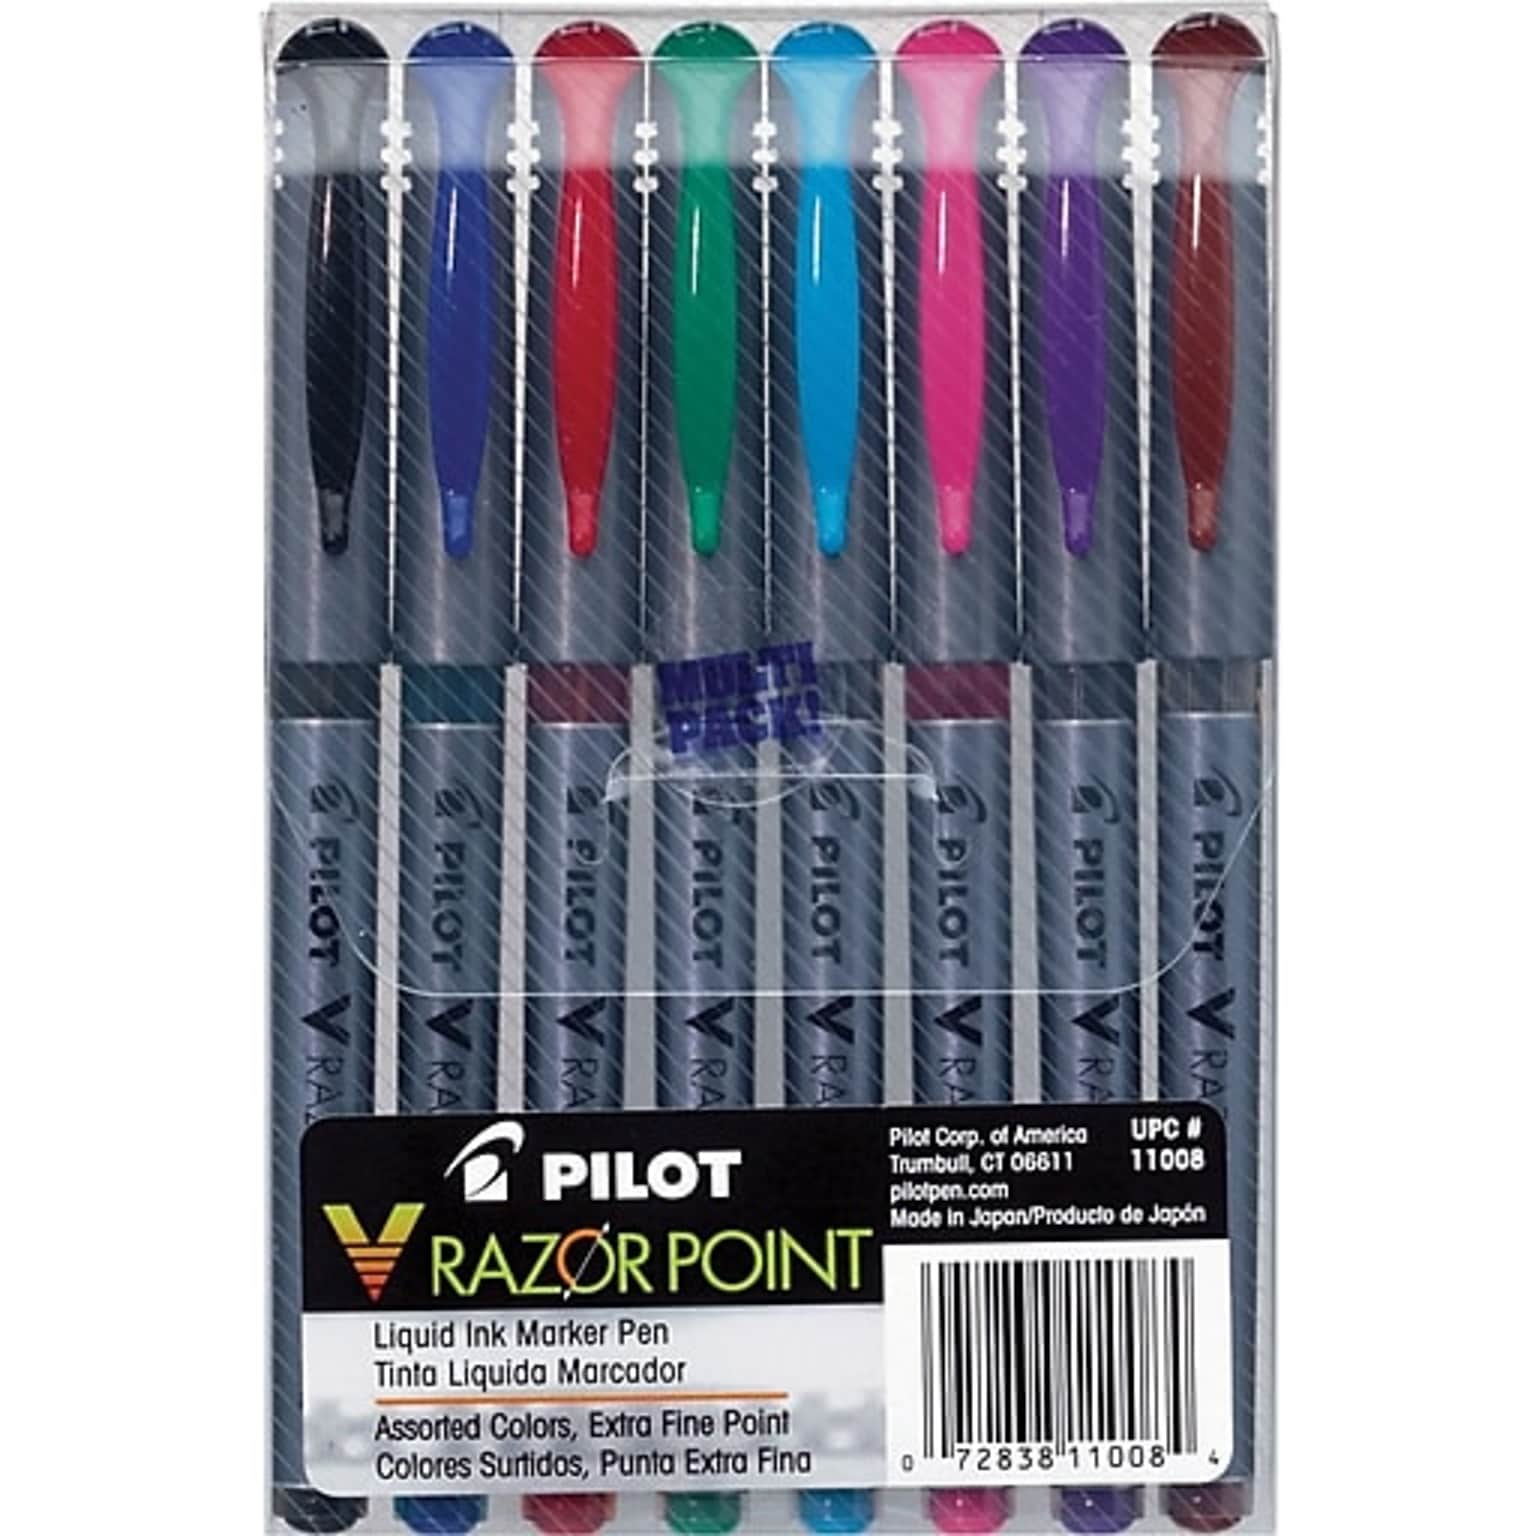 Pilot V Razor Point Liquid Ink Marker Pens, Extra Fine Point, Assorted, 8/Pack (11008)